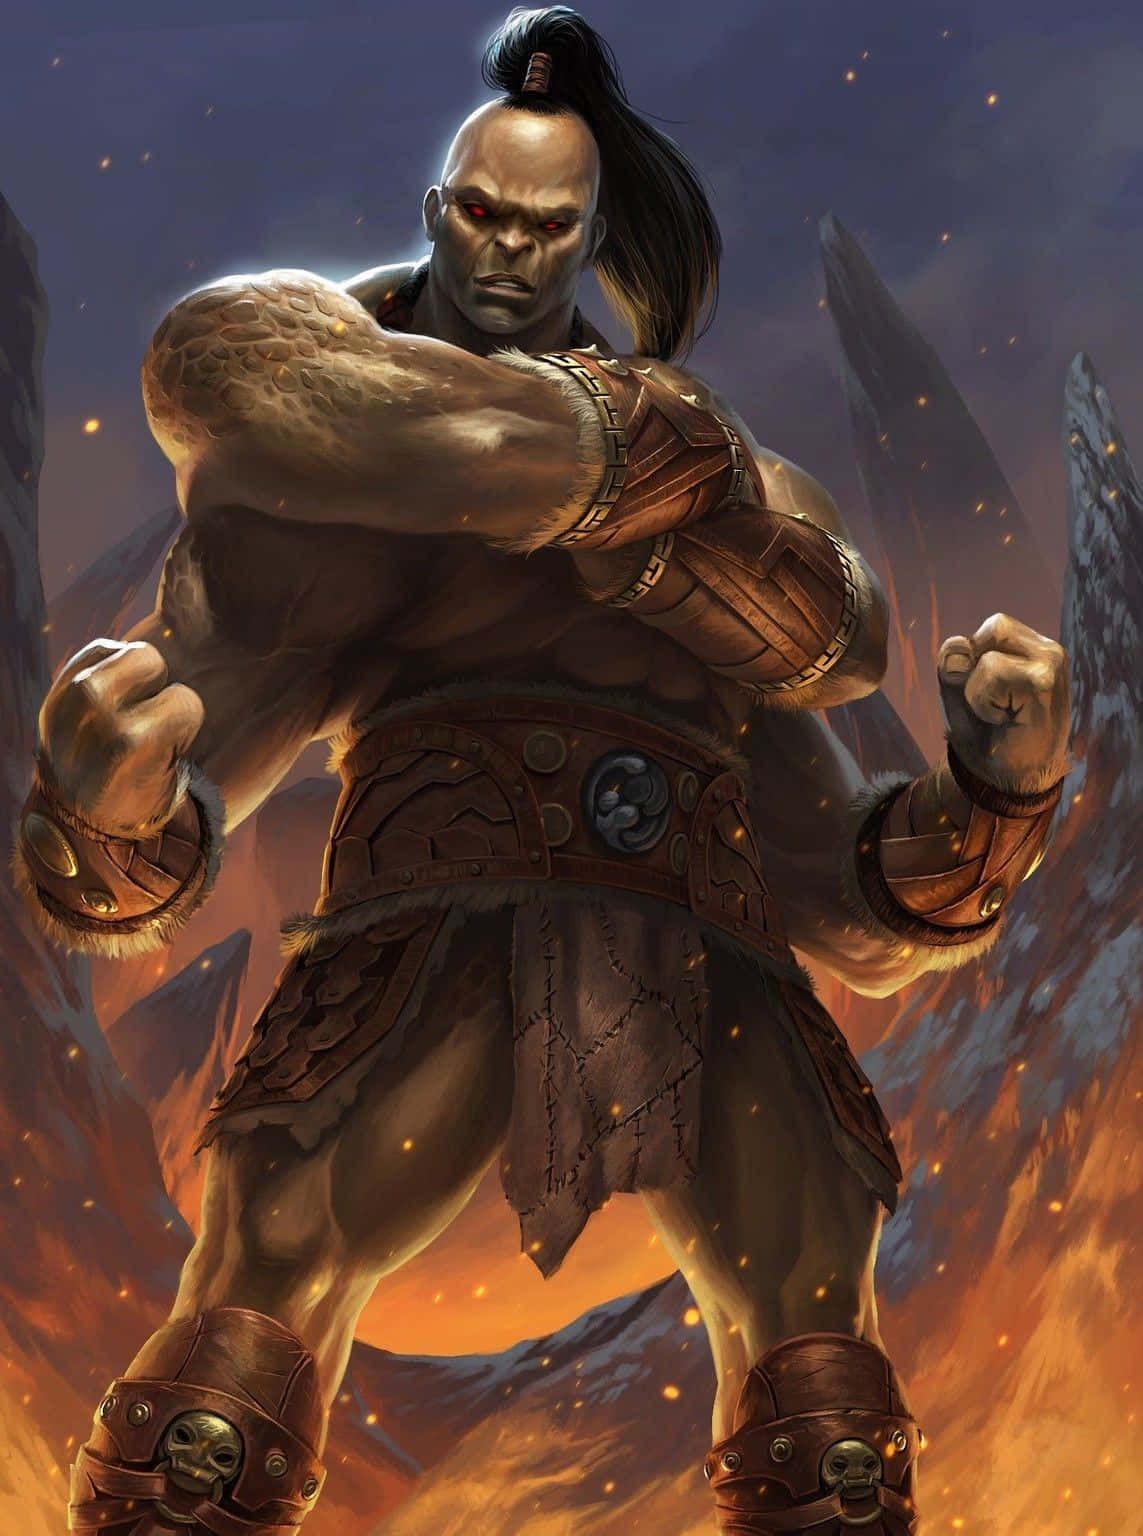 Goro, the powerful half-human half-dragon warrior, striking a fearsome pose in Mortal Kombat. Wallpaper